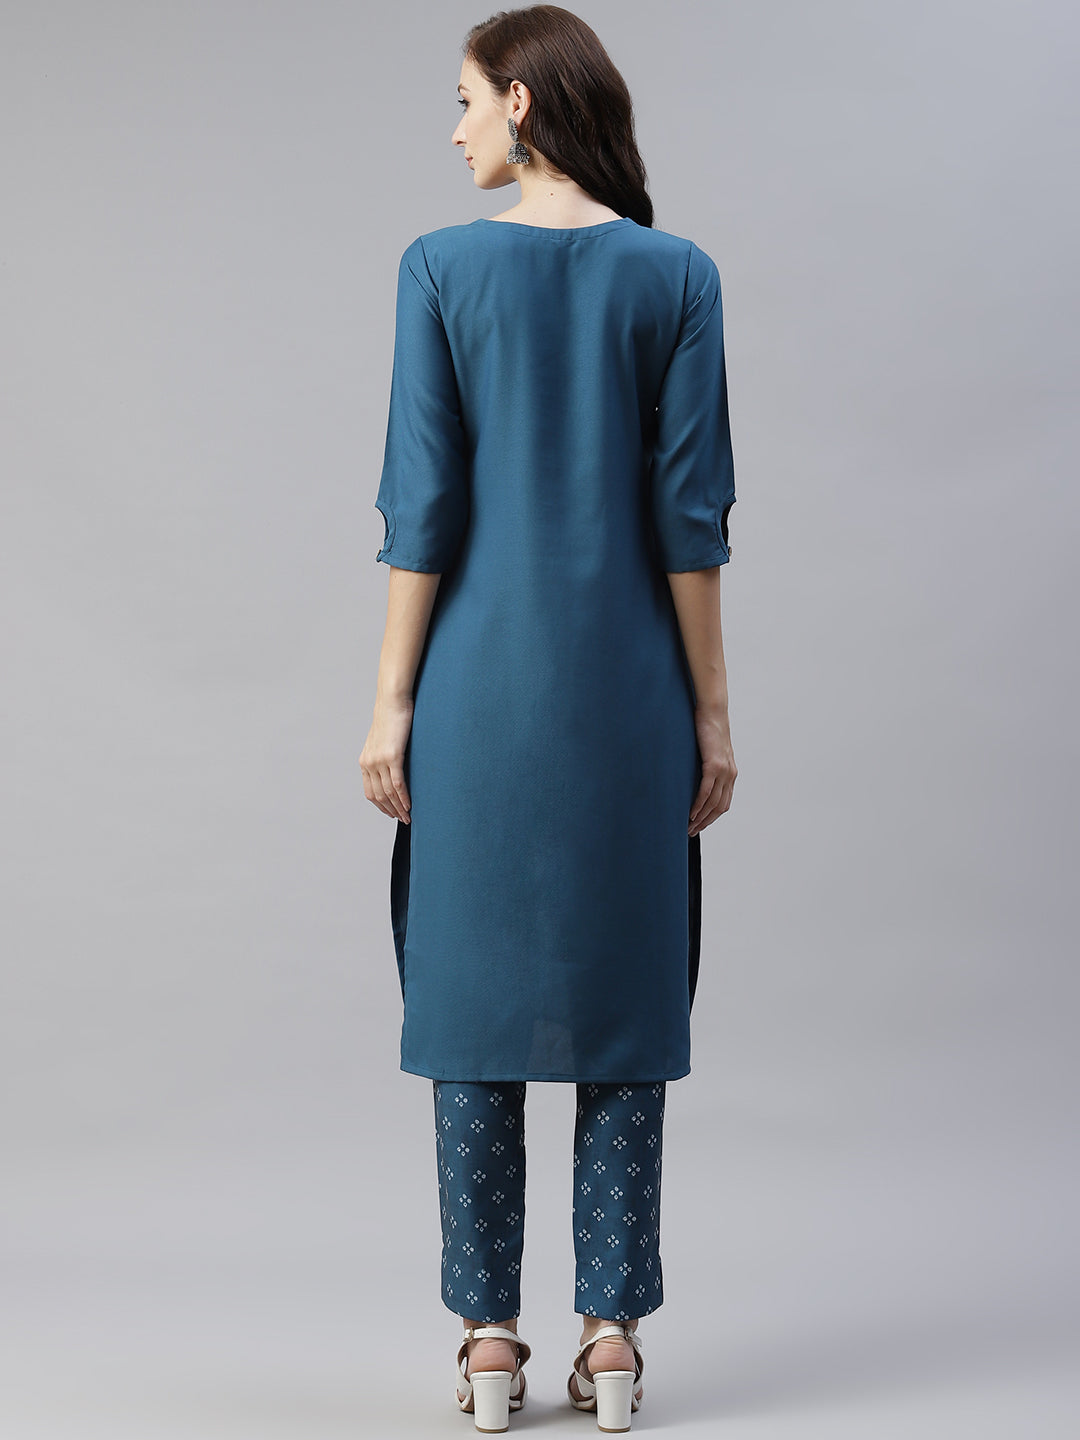 Women's Blue Colour Digital Printed Rayon Kurta - Ziyaa